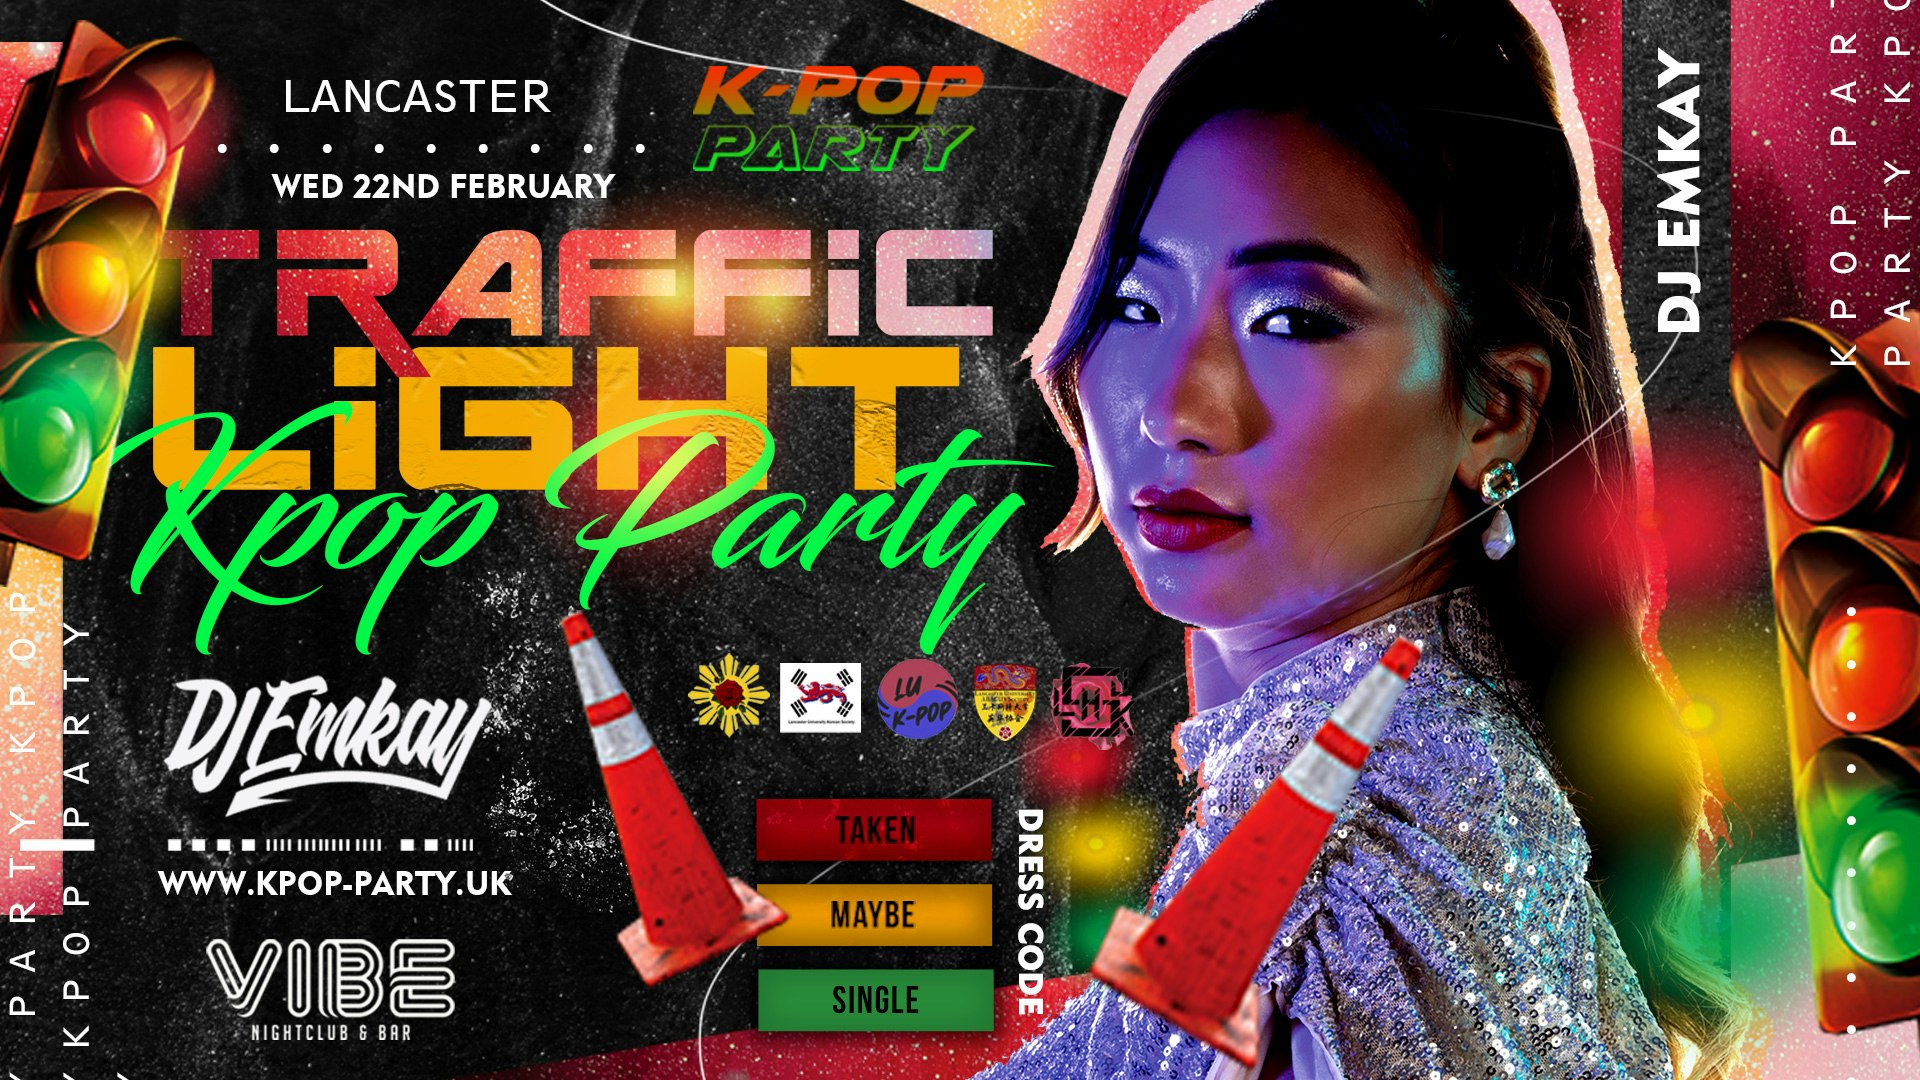 K-Pop Traffic Light Party Lancaster with DJ EMKAY | Wednesday 22nd February